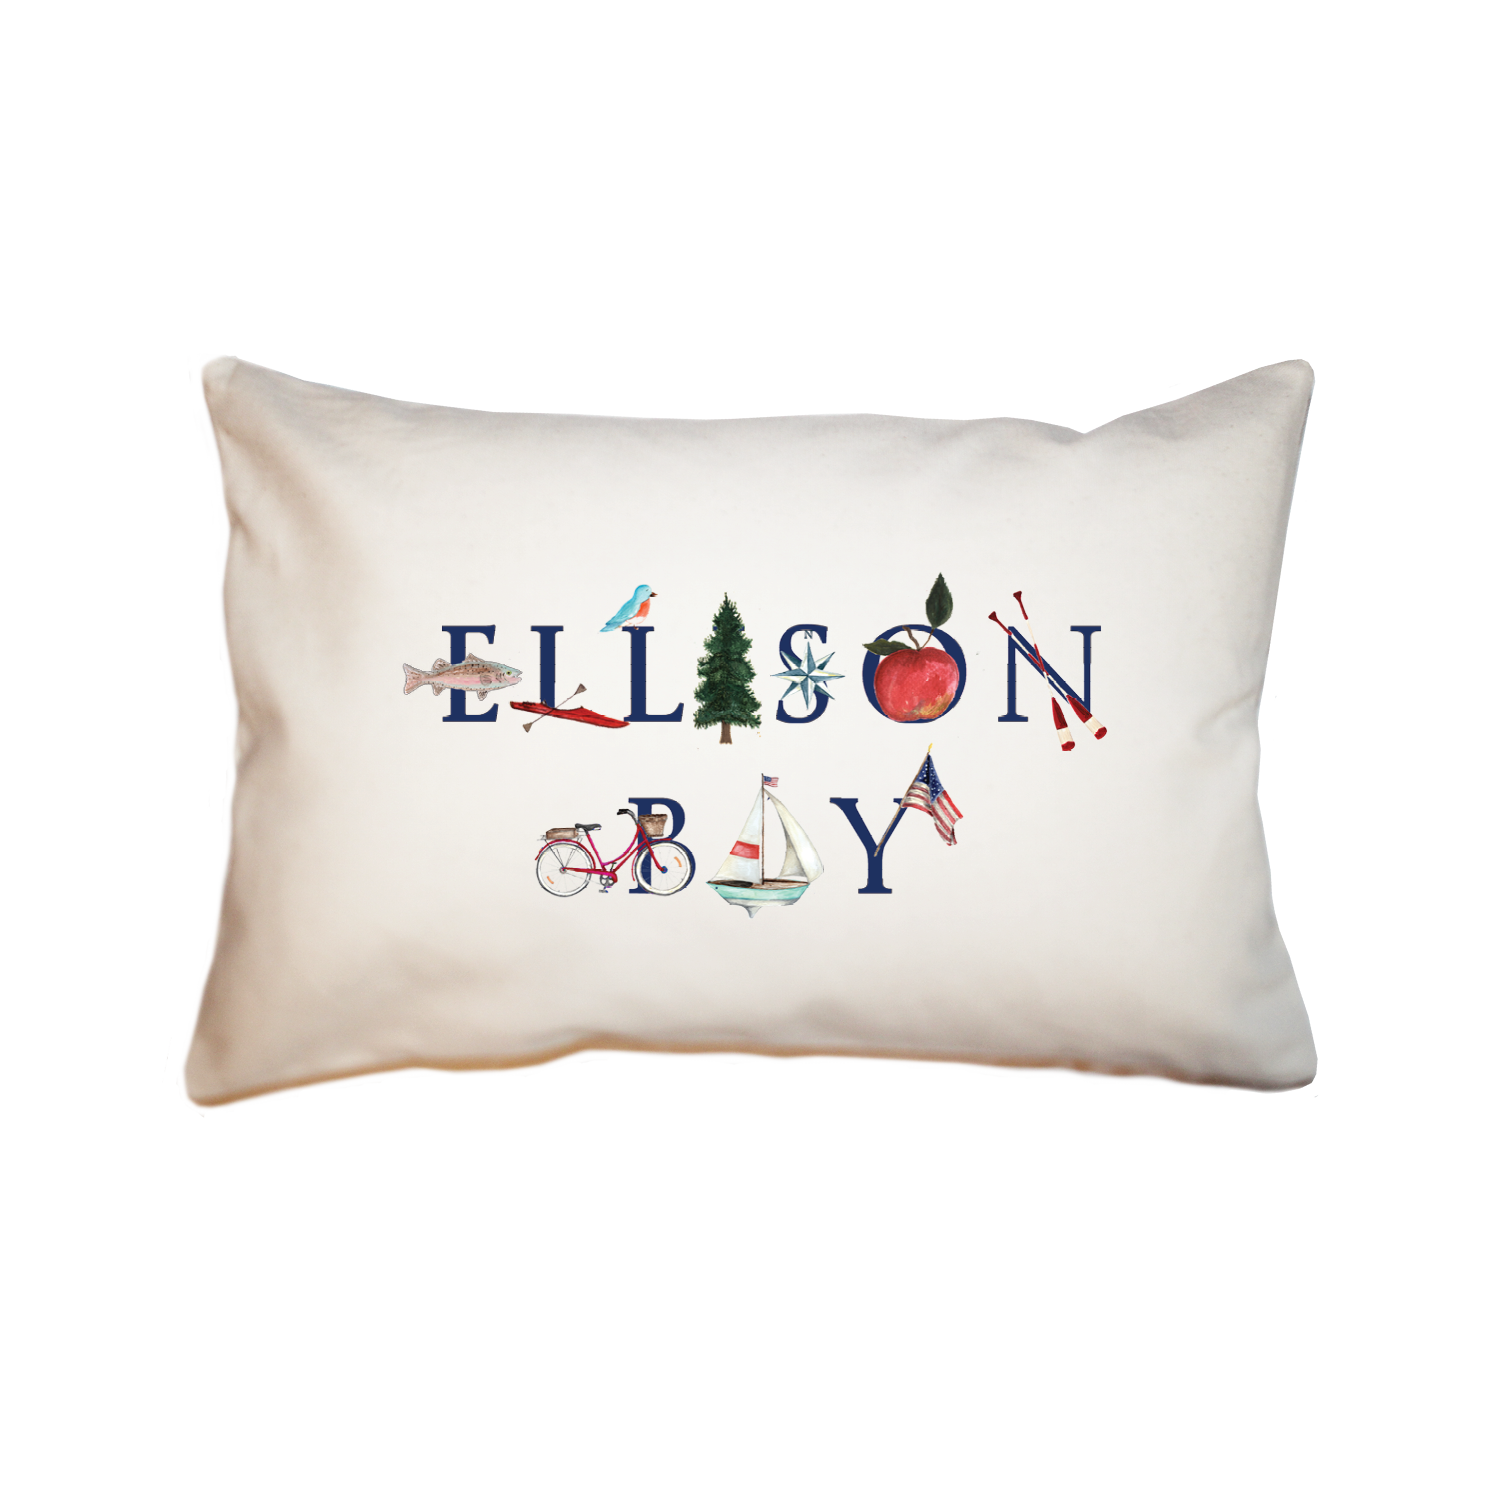 Ellison Bay large rectangle pillow